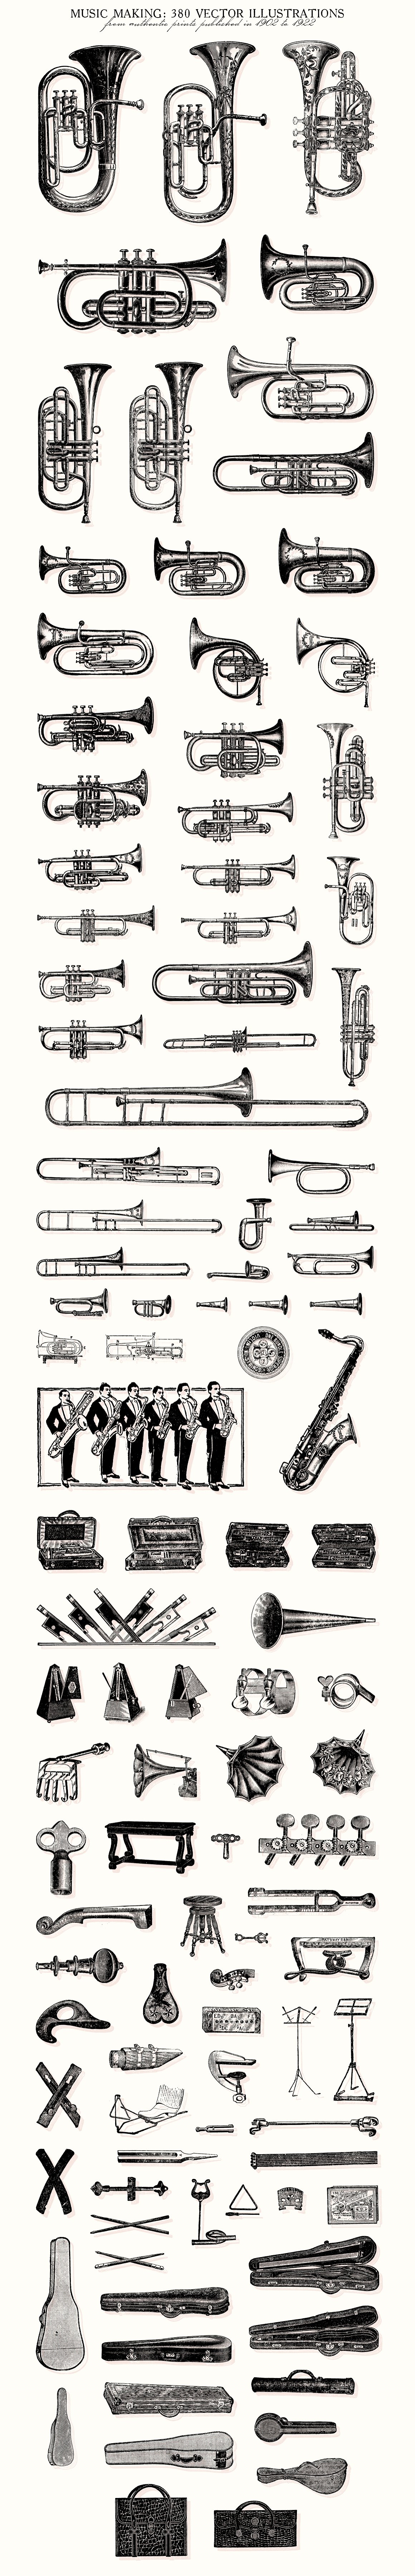 Set of unique images of vintage musical instruments.